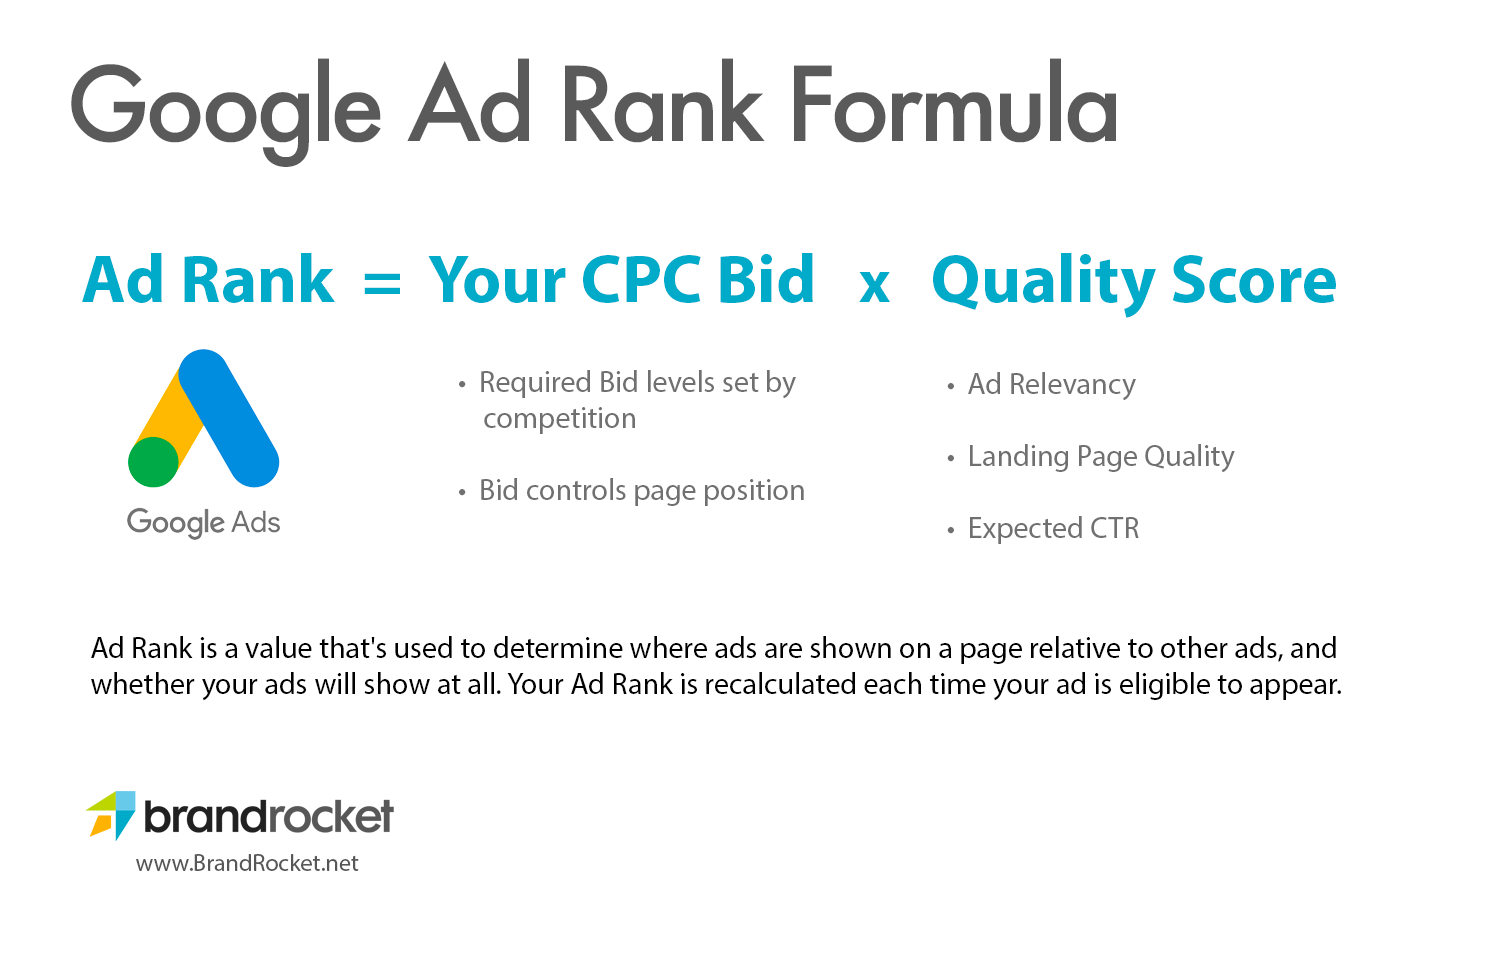 Google's Ad Rank Formula